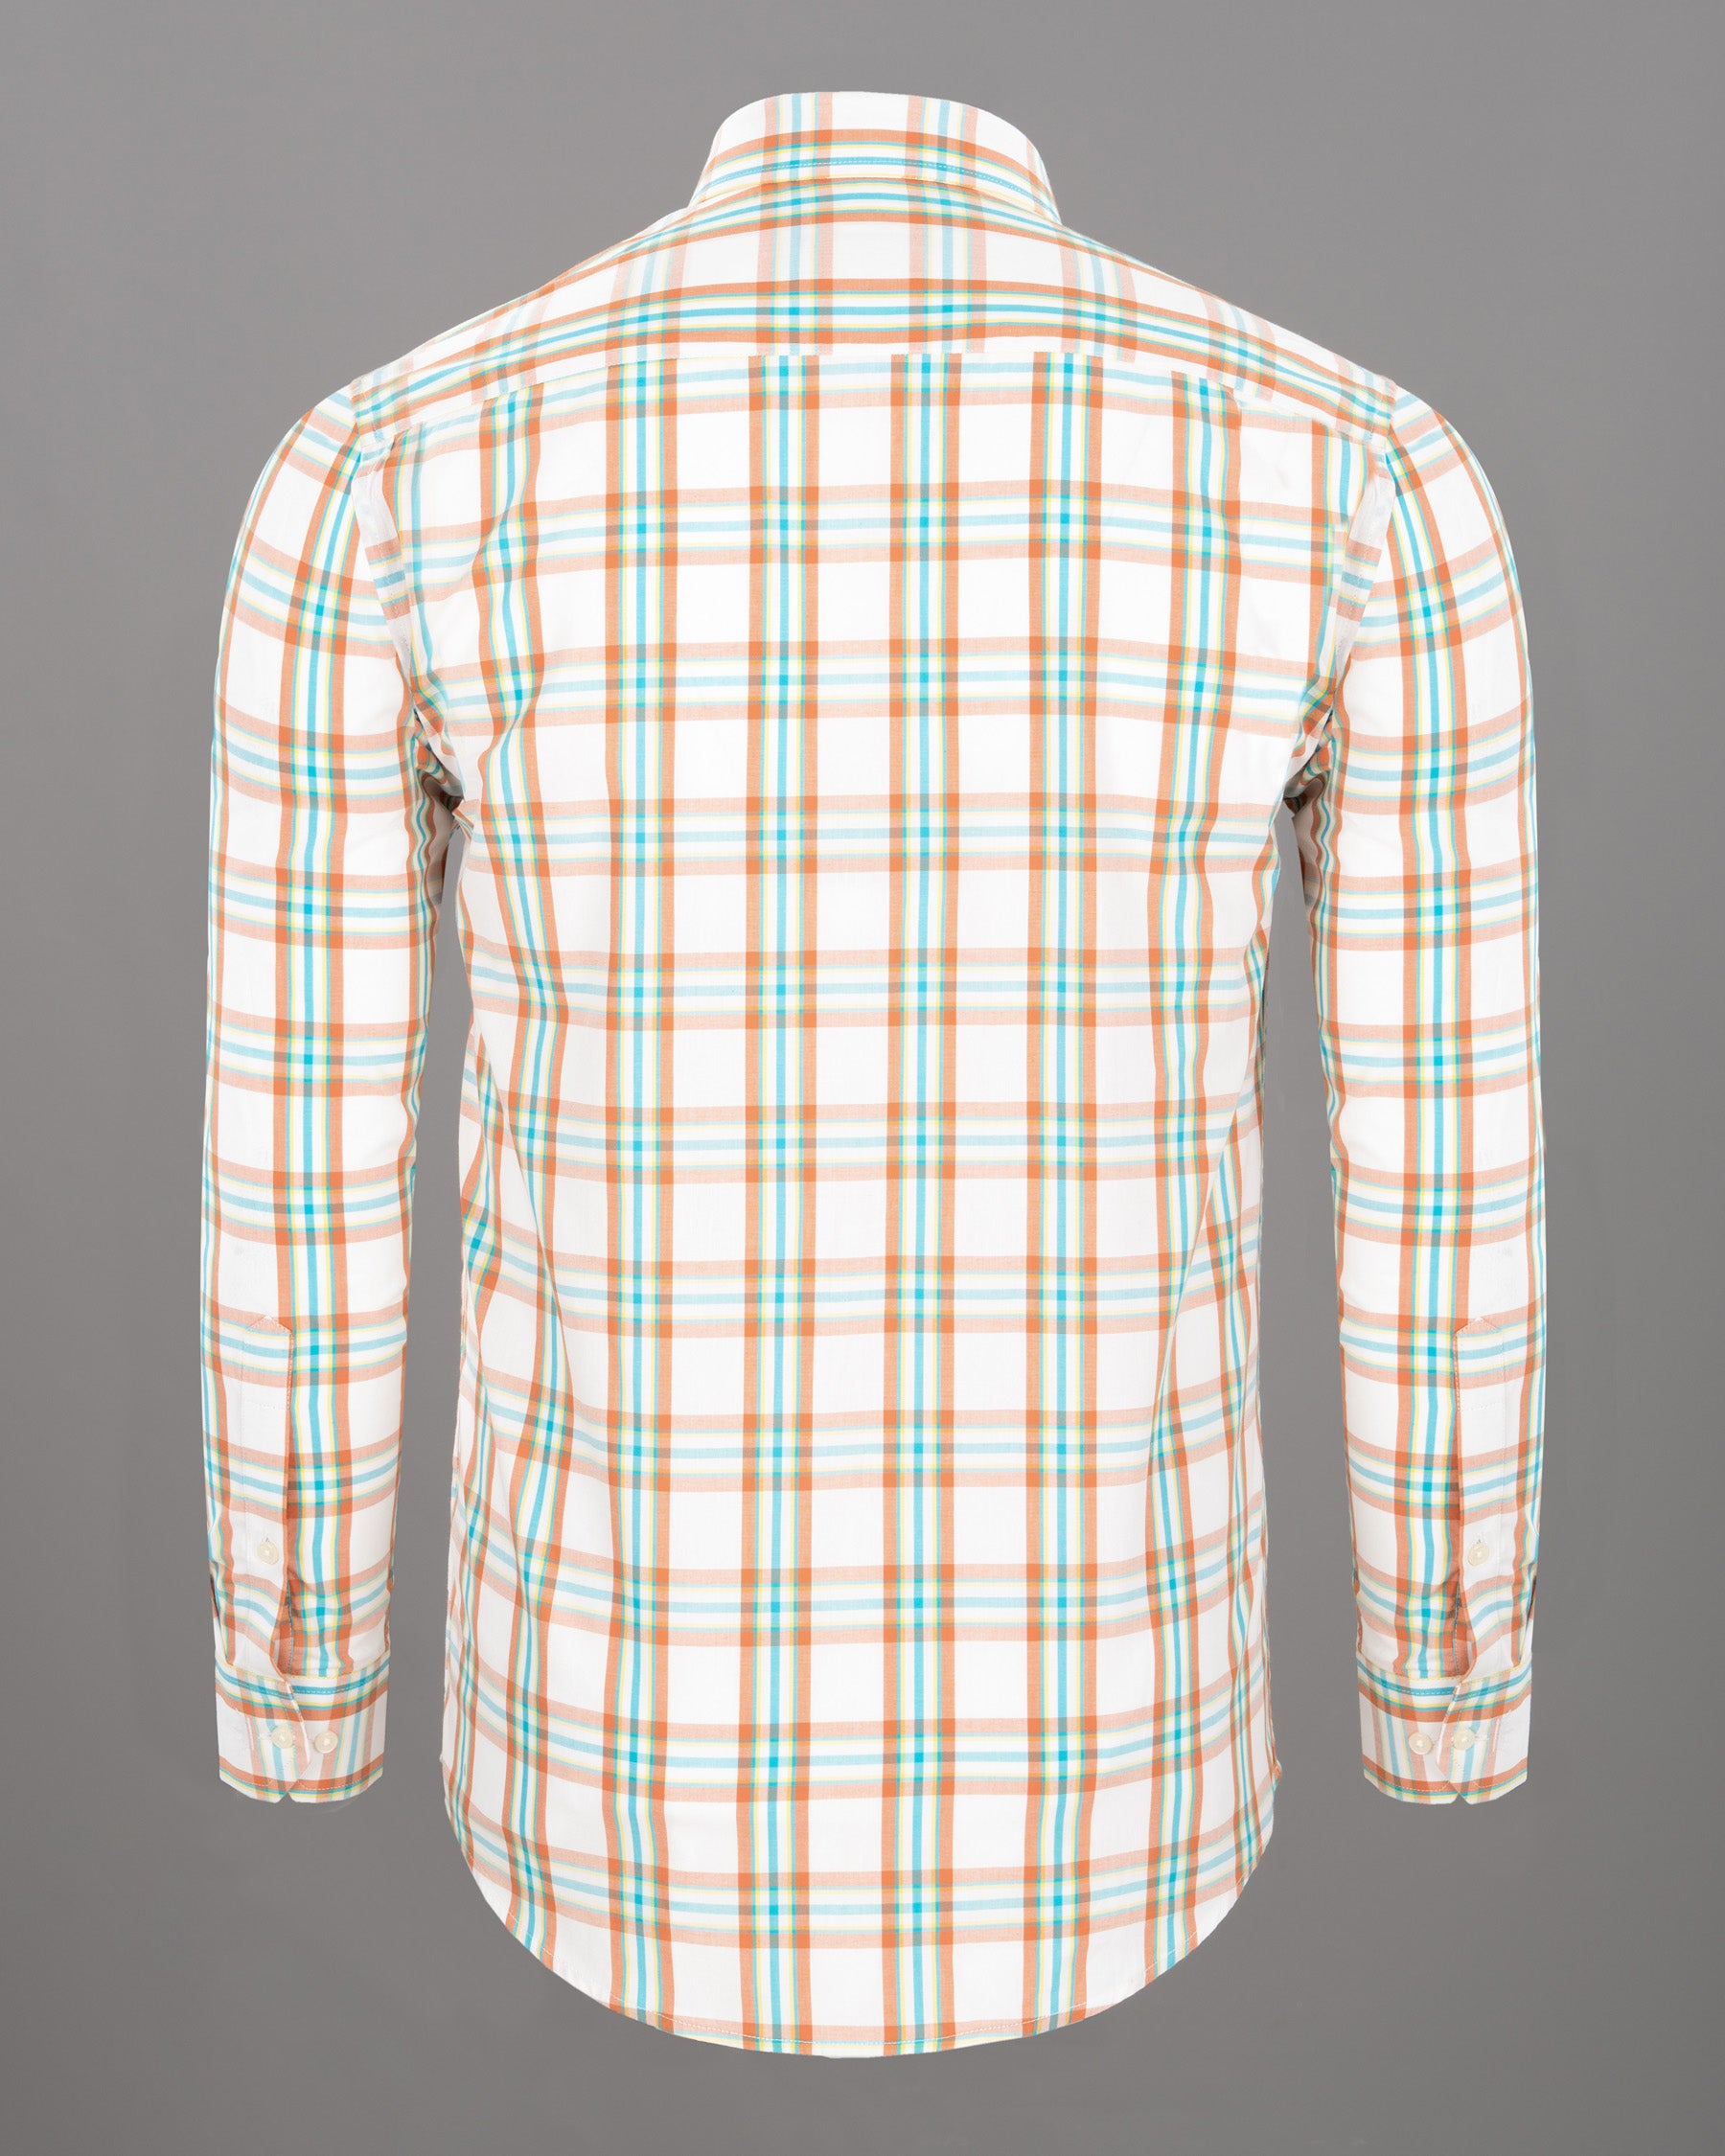 Off White with Apricot Orange and Mizuasagi Blue Plaid Premium Cotton Shirt